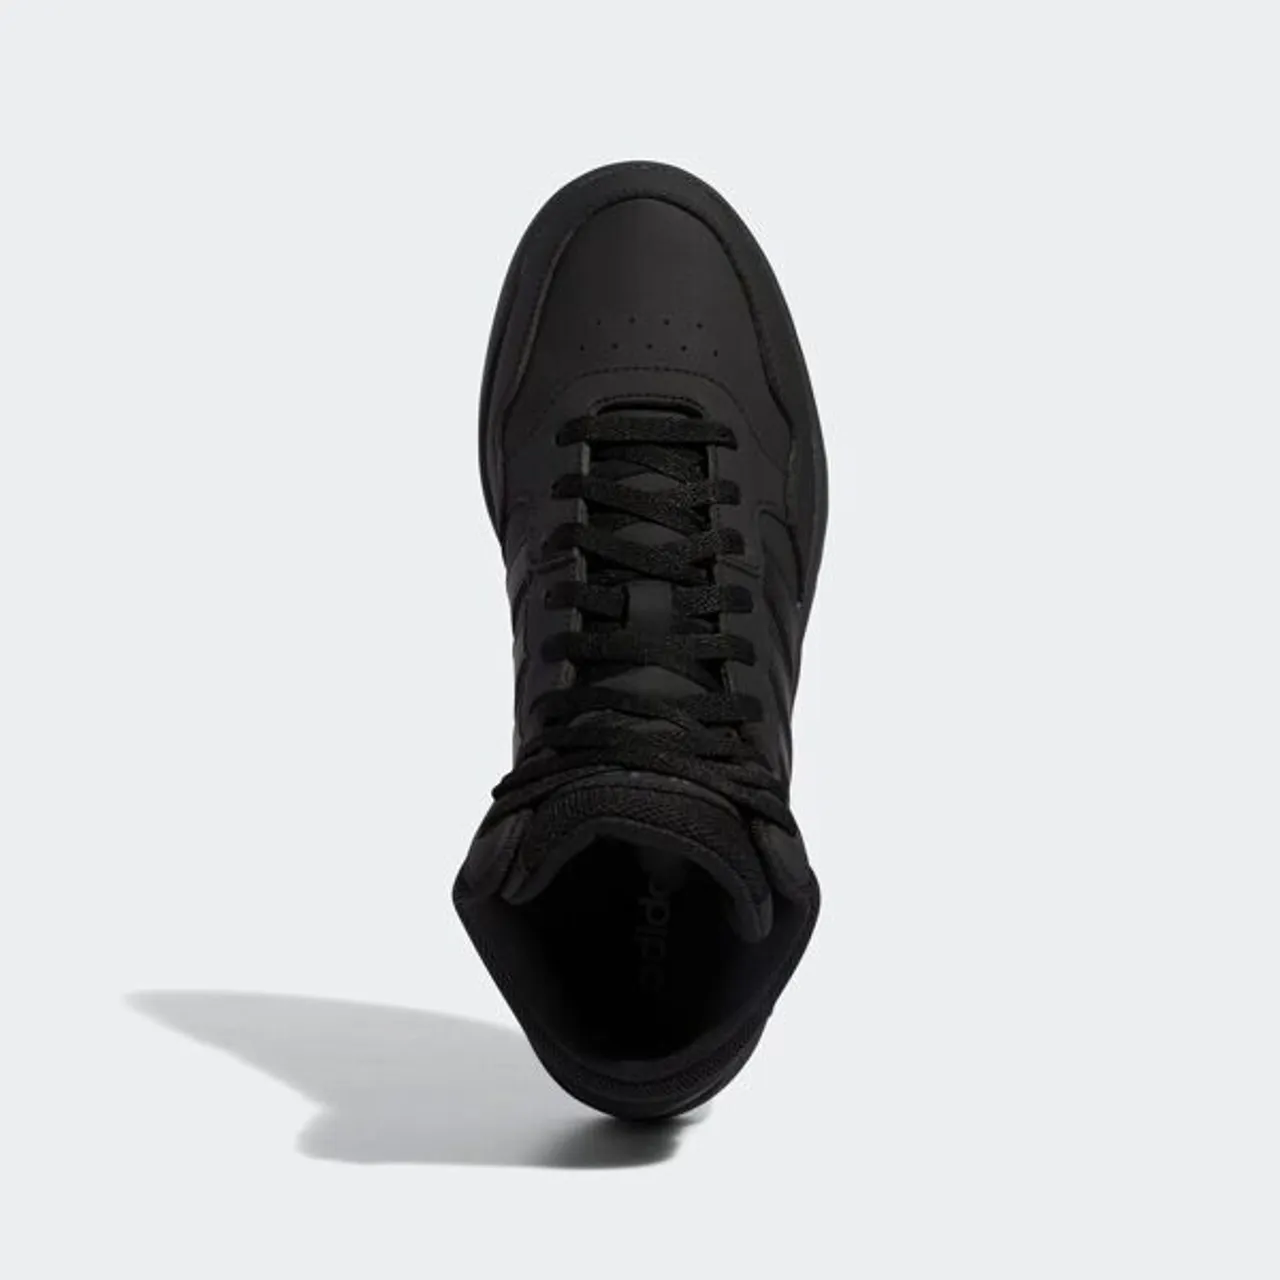 Sneaker ADIDAS SPORTSWEAR "HOOPS 3 MID LIFESTYLE BASKETBALL CLASSIC" Gr. 47, schwarz (core black, core grey si) Schuhe Stoffschuhe